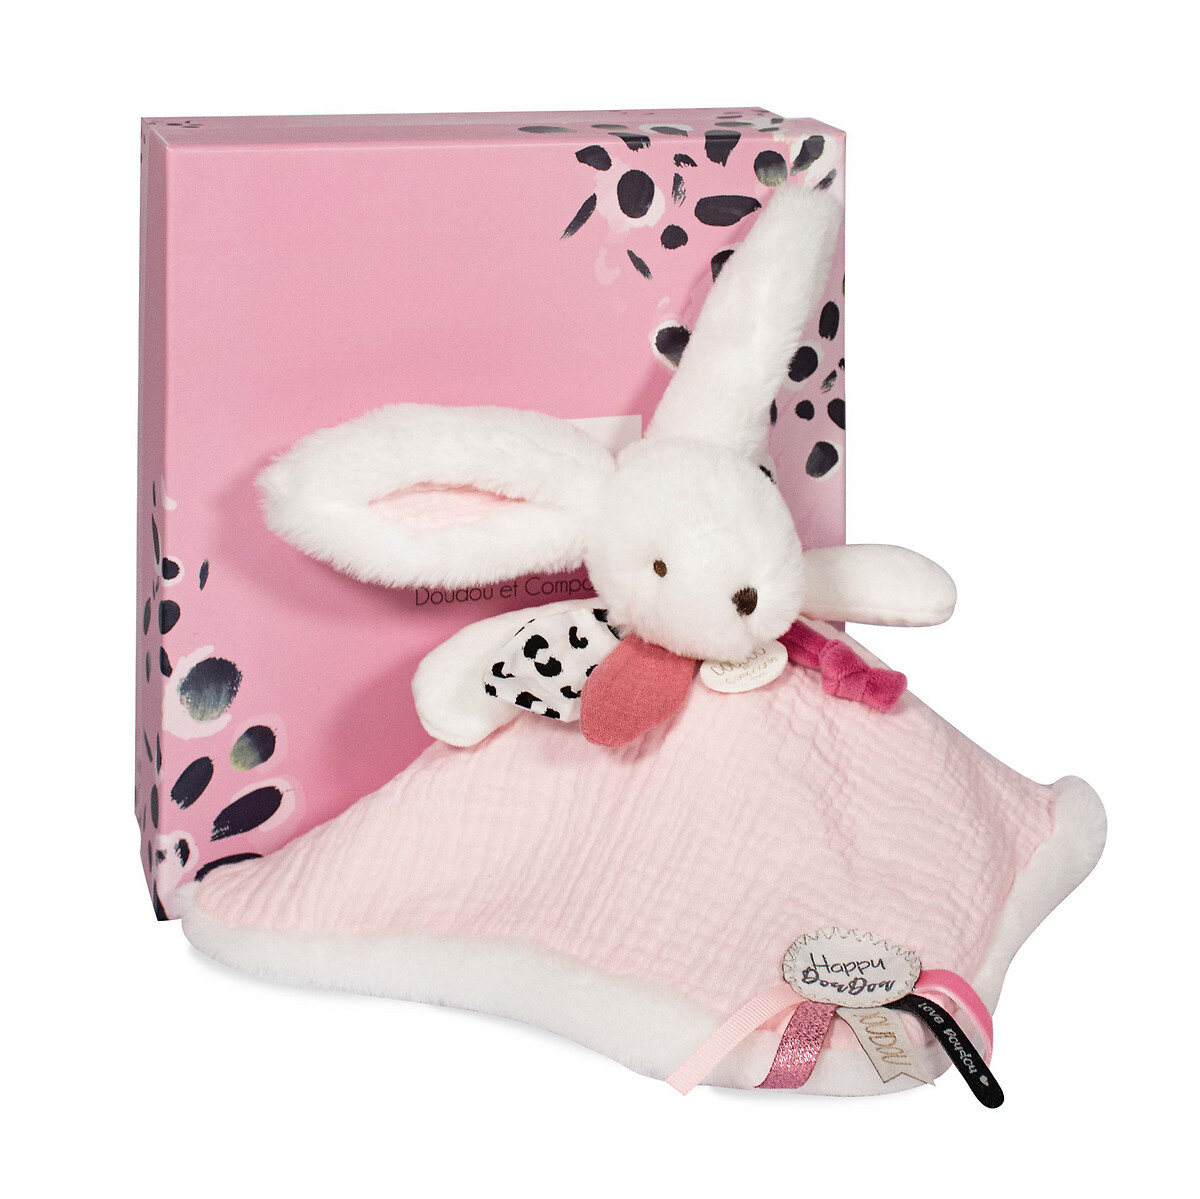 Image of Happy Blush Cuddly Toy, 25 cm